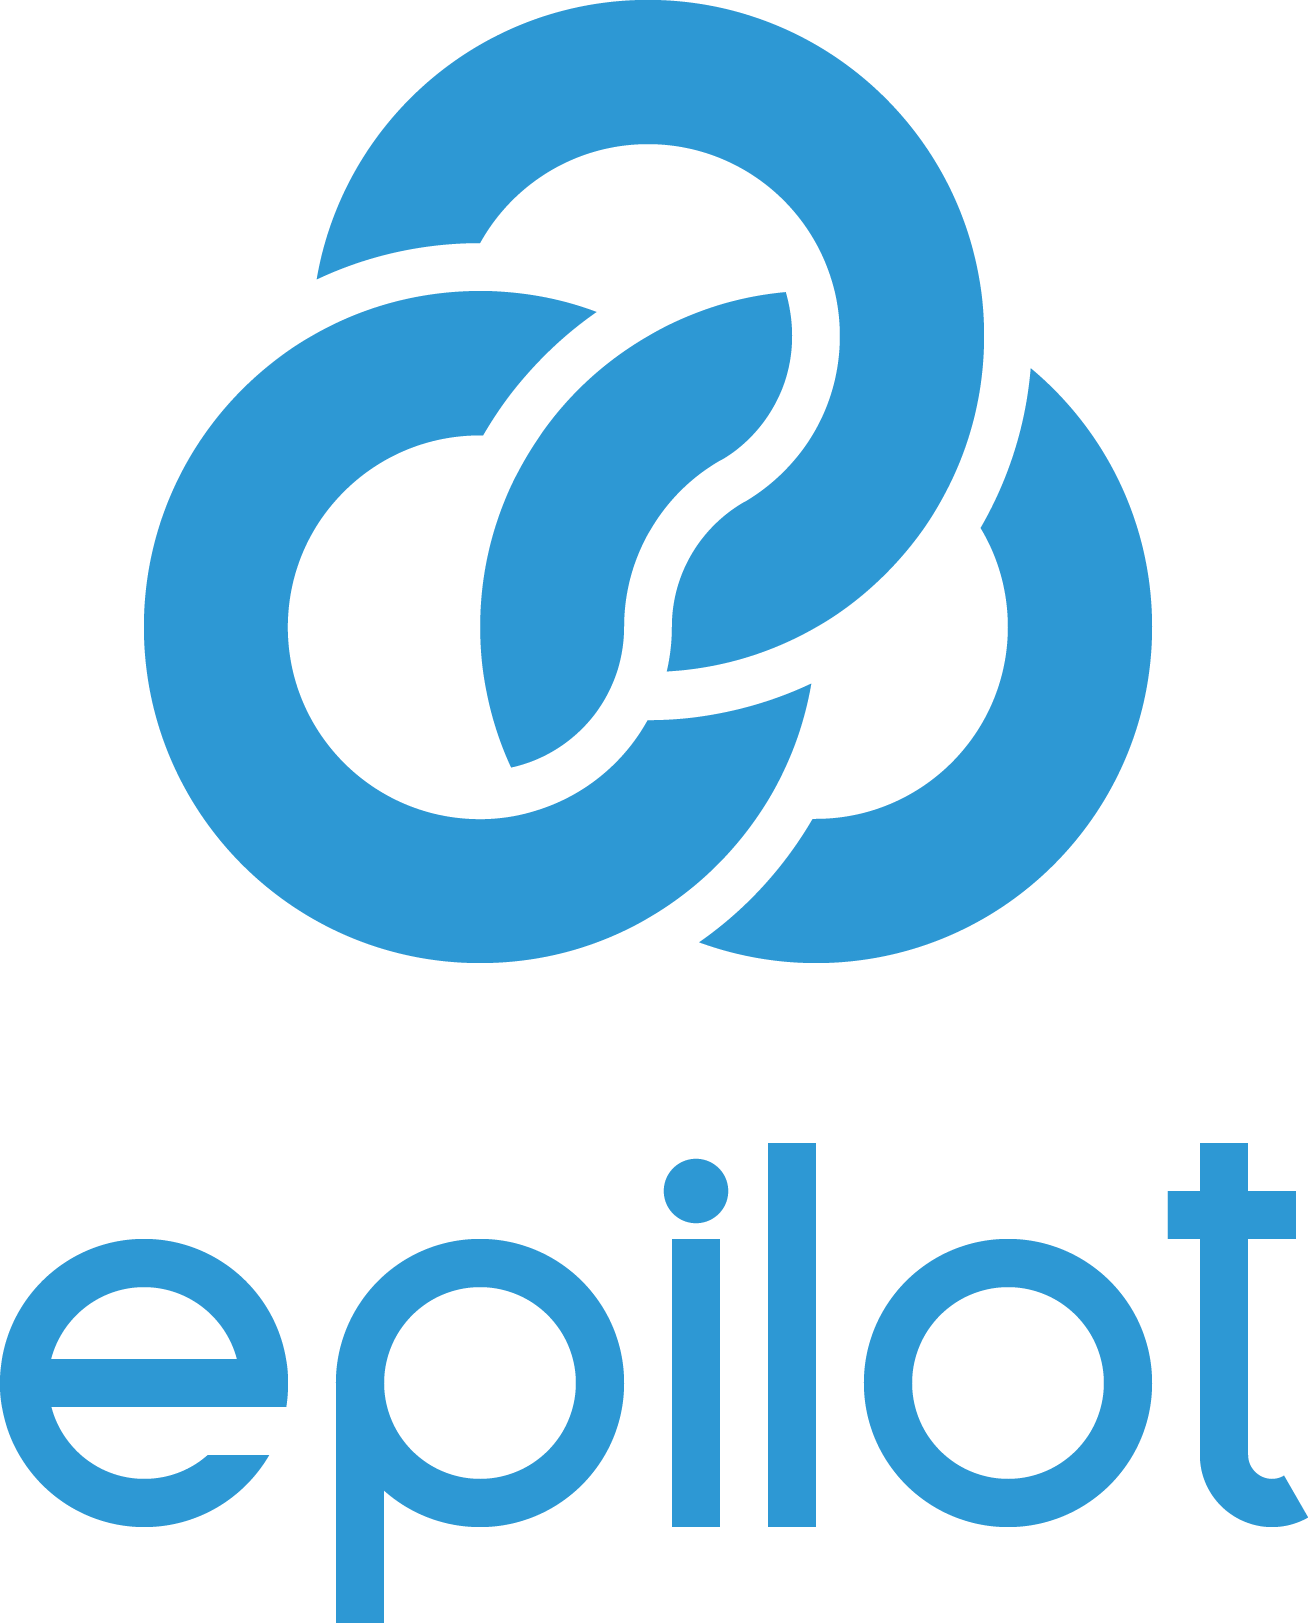 epilot